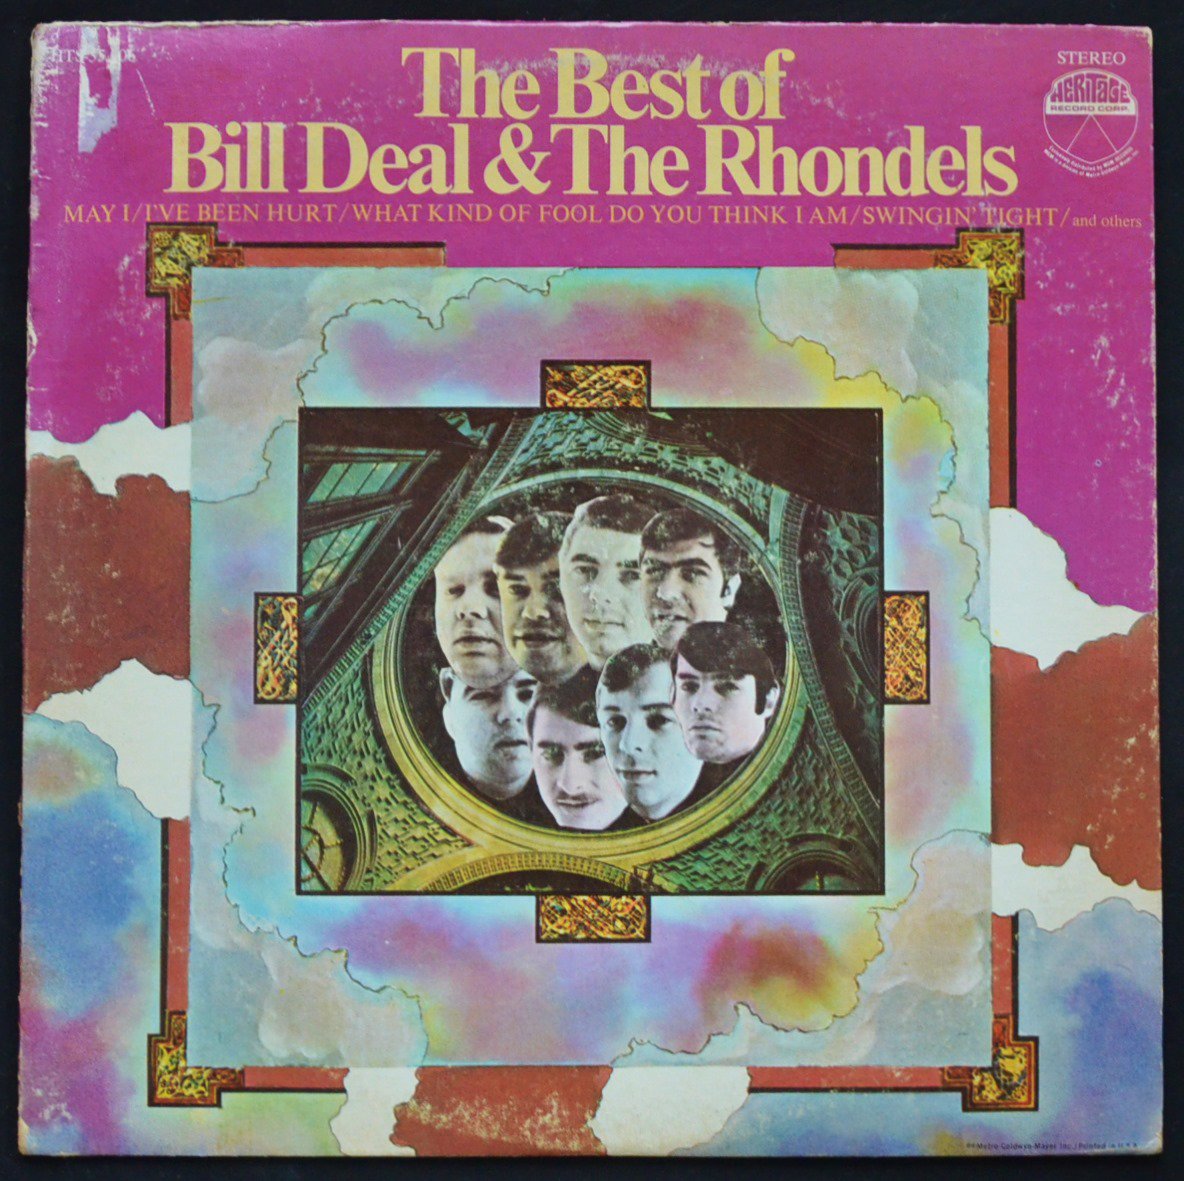 BILL DEAL & THE RHONDELS / THE BEST OF BILL DEAL & THE RHONDELS (LP)